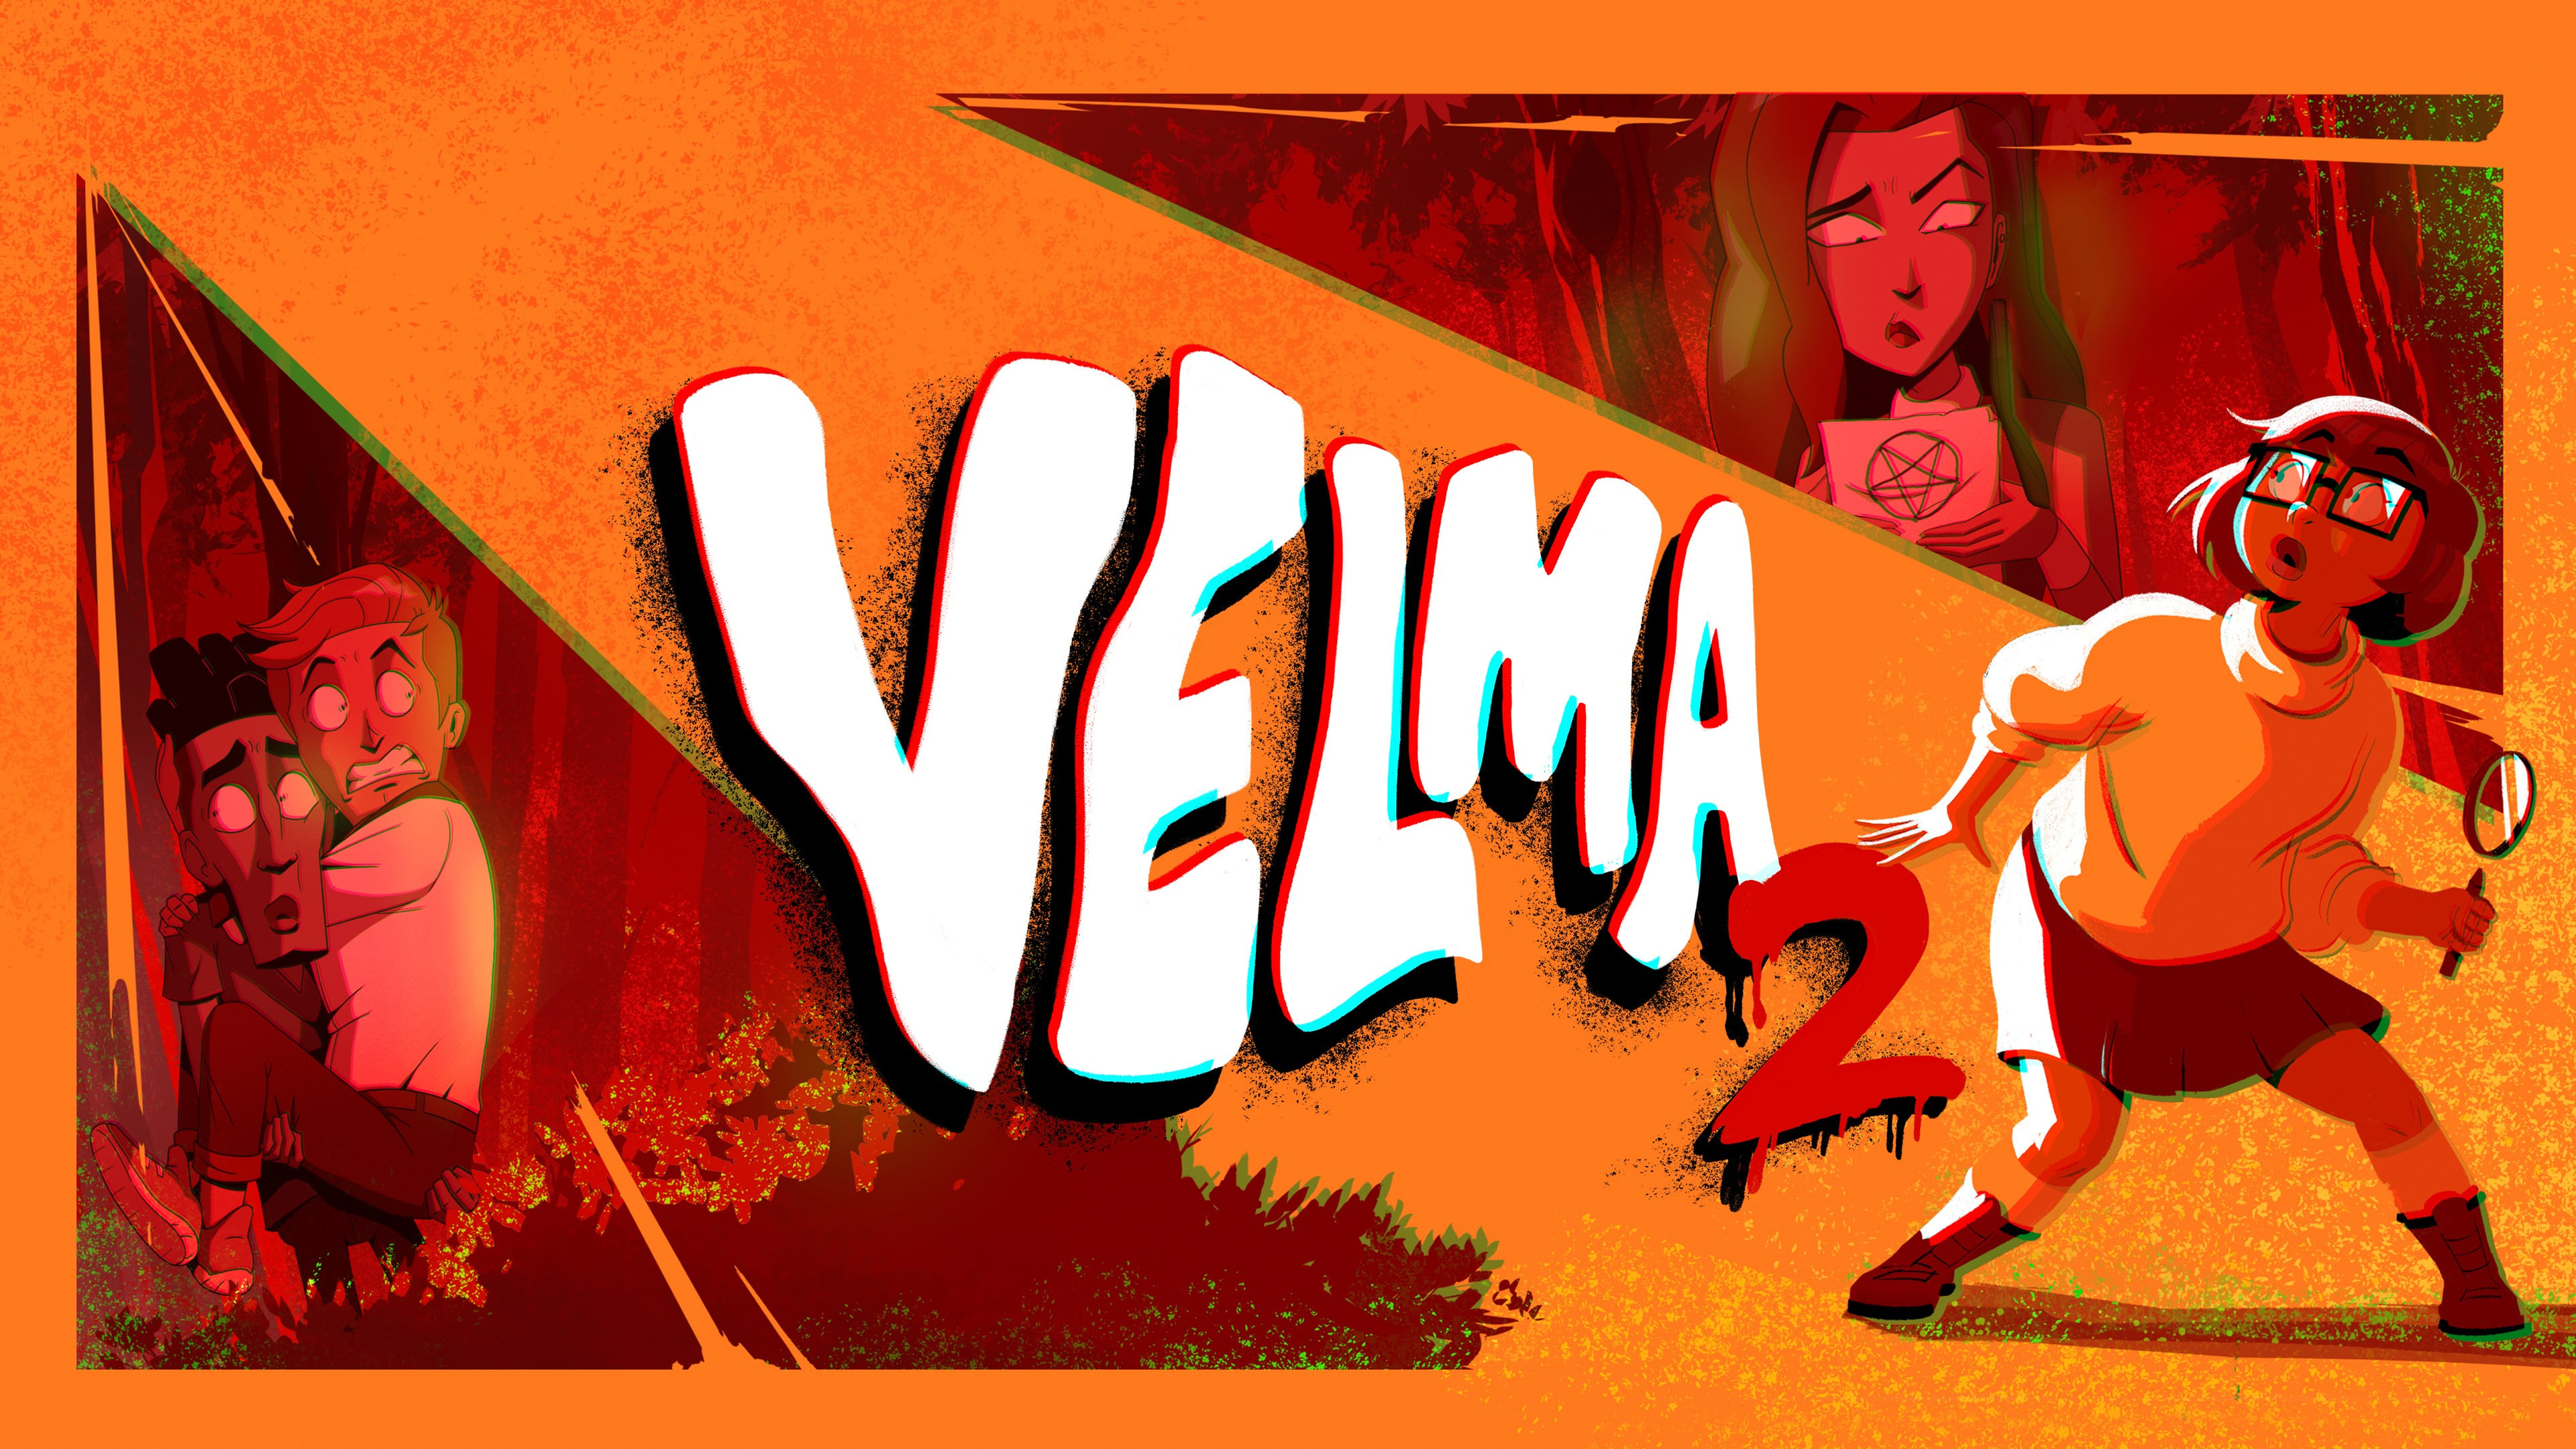 Velma - Season 1 Episode 6